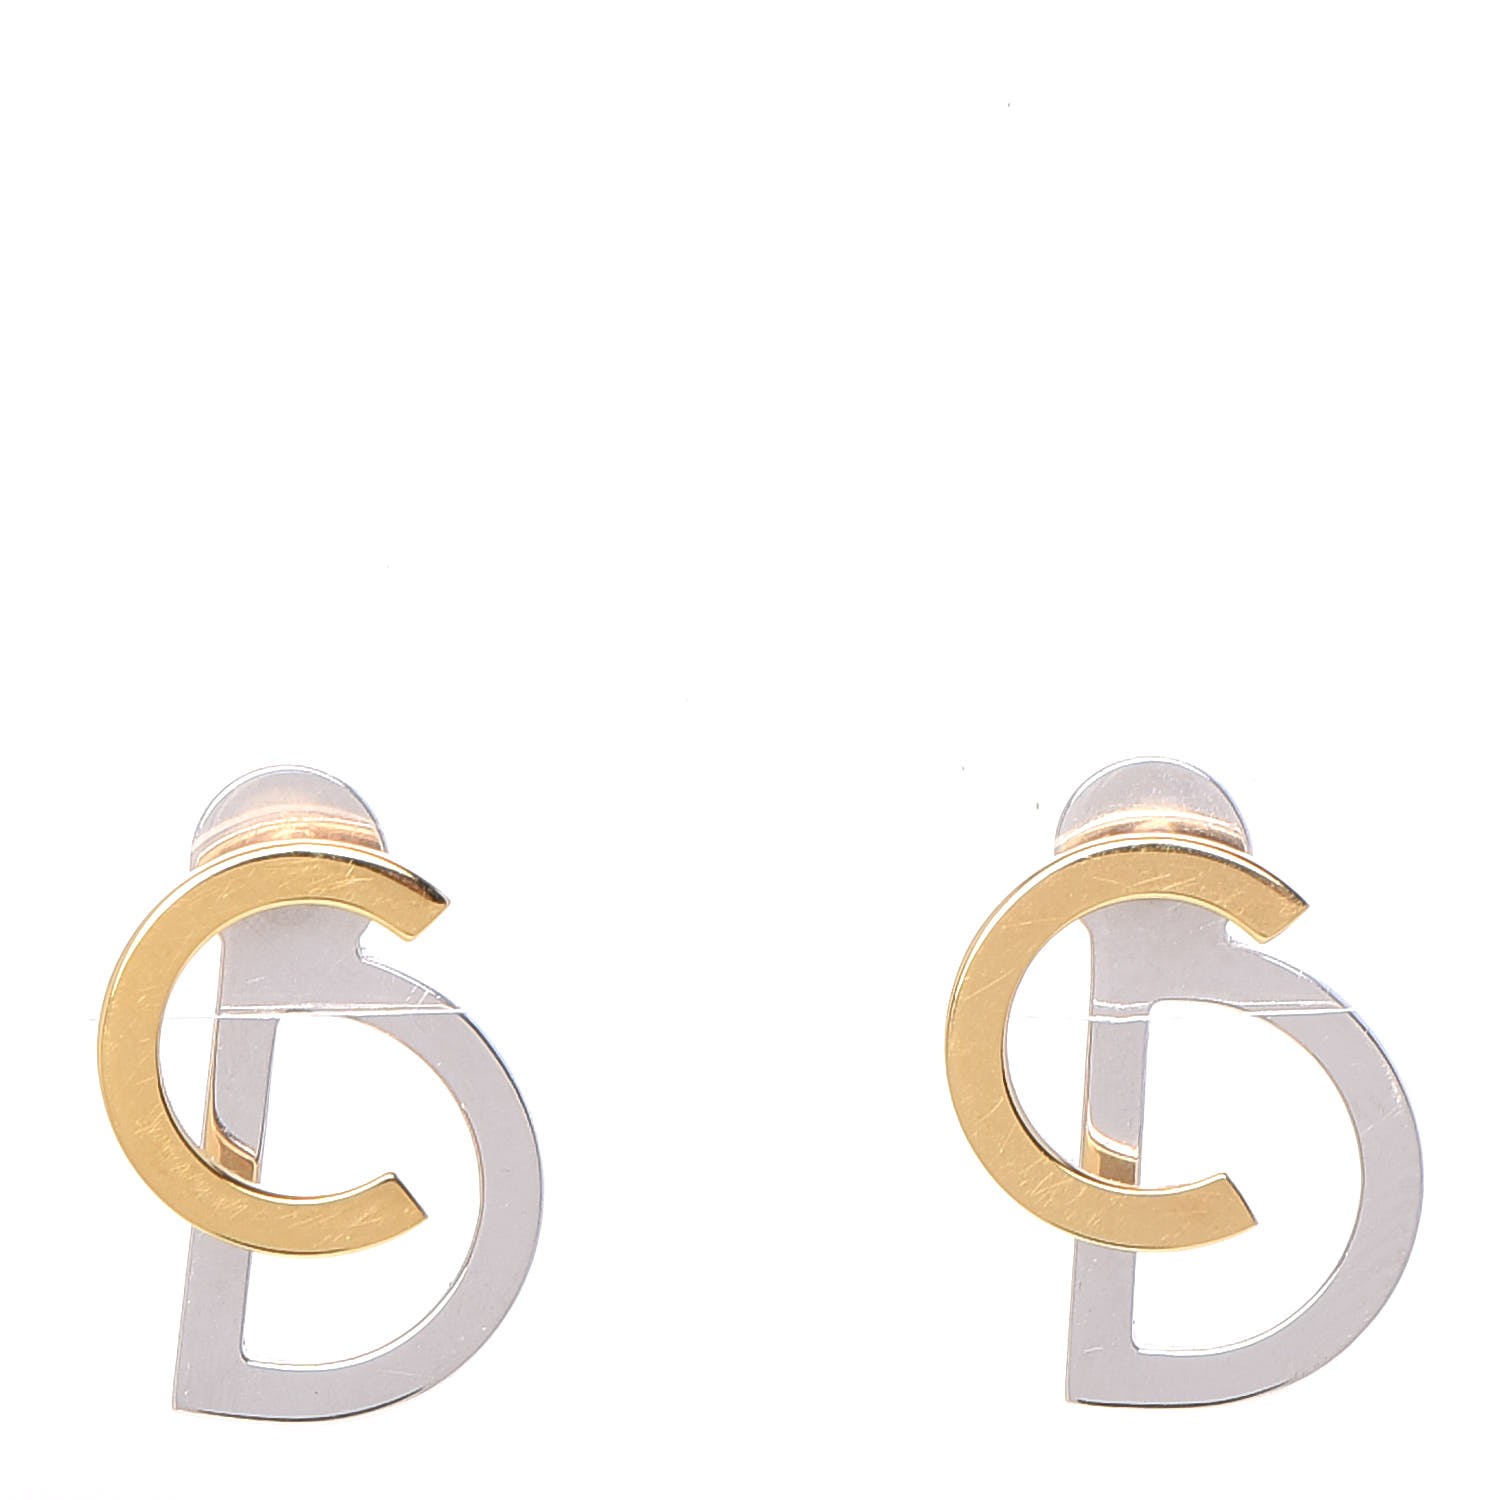 christian dior initial earrings